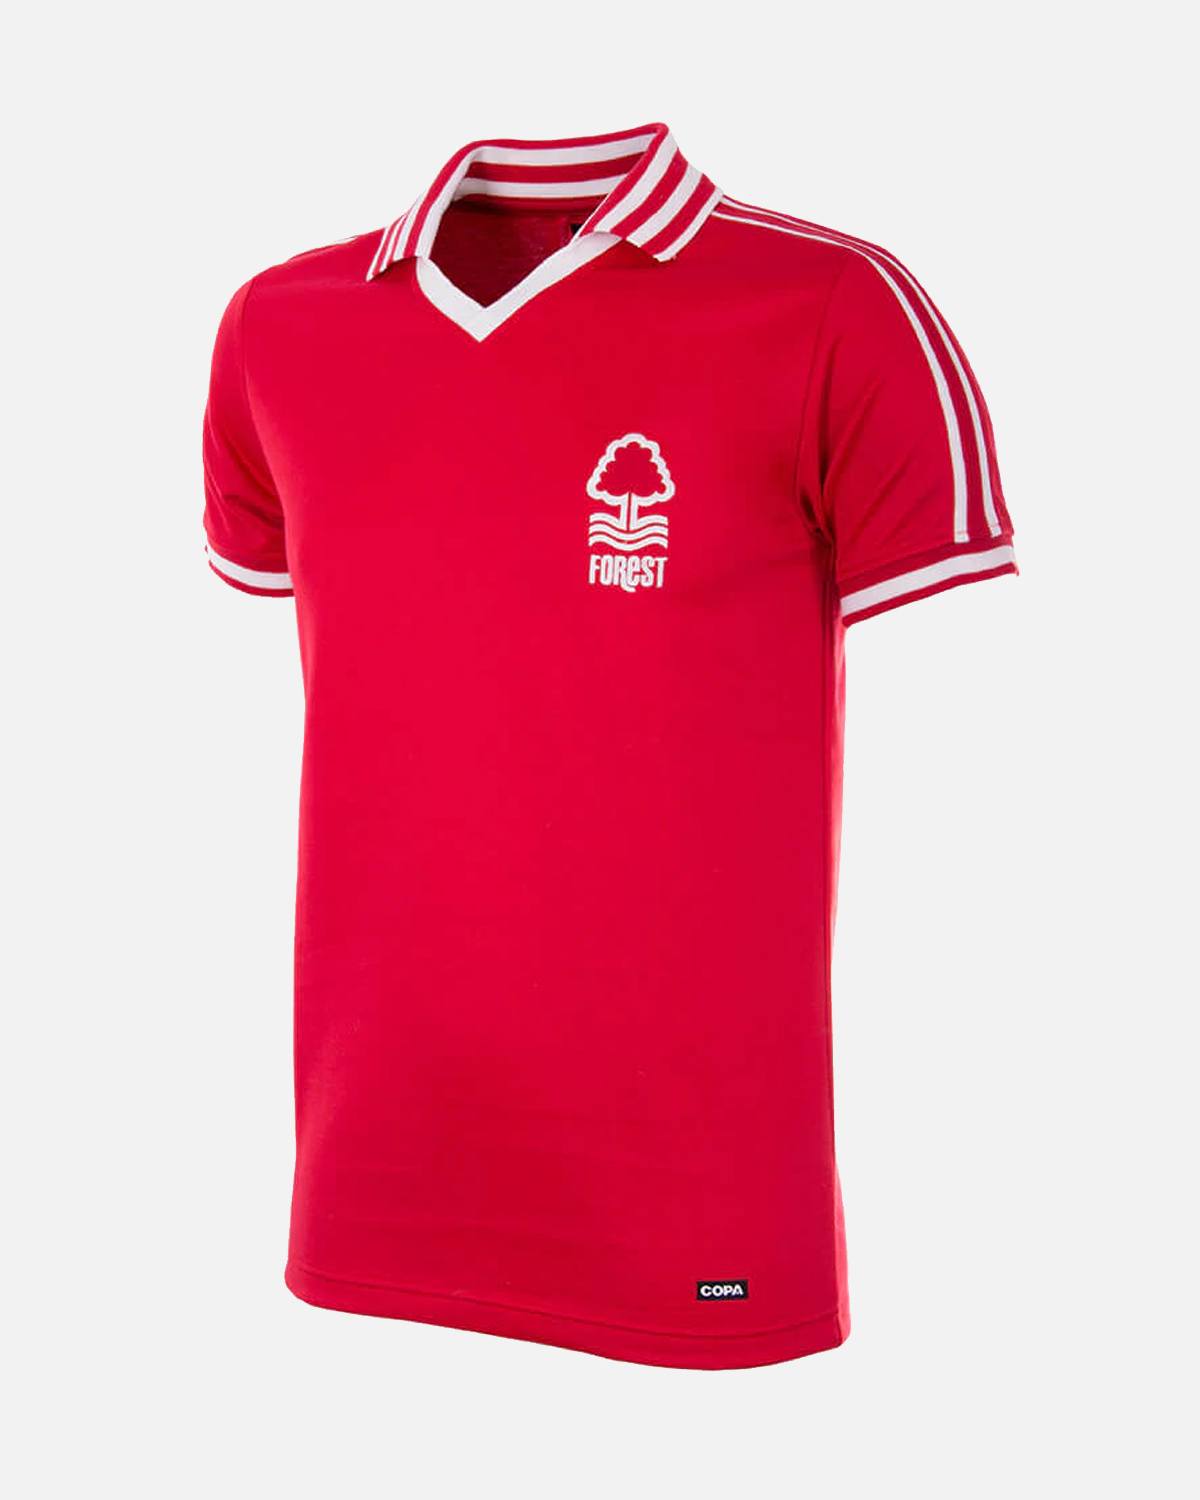 NFFC Adult Retro 1976 Home Shirt - Nottingham Forest FC